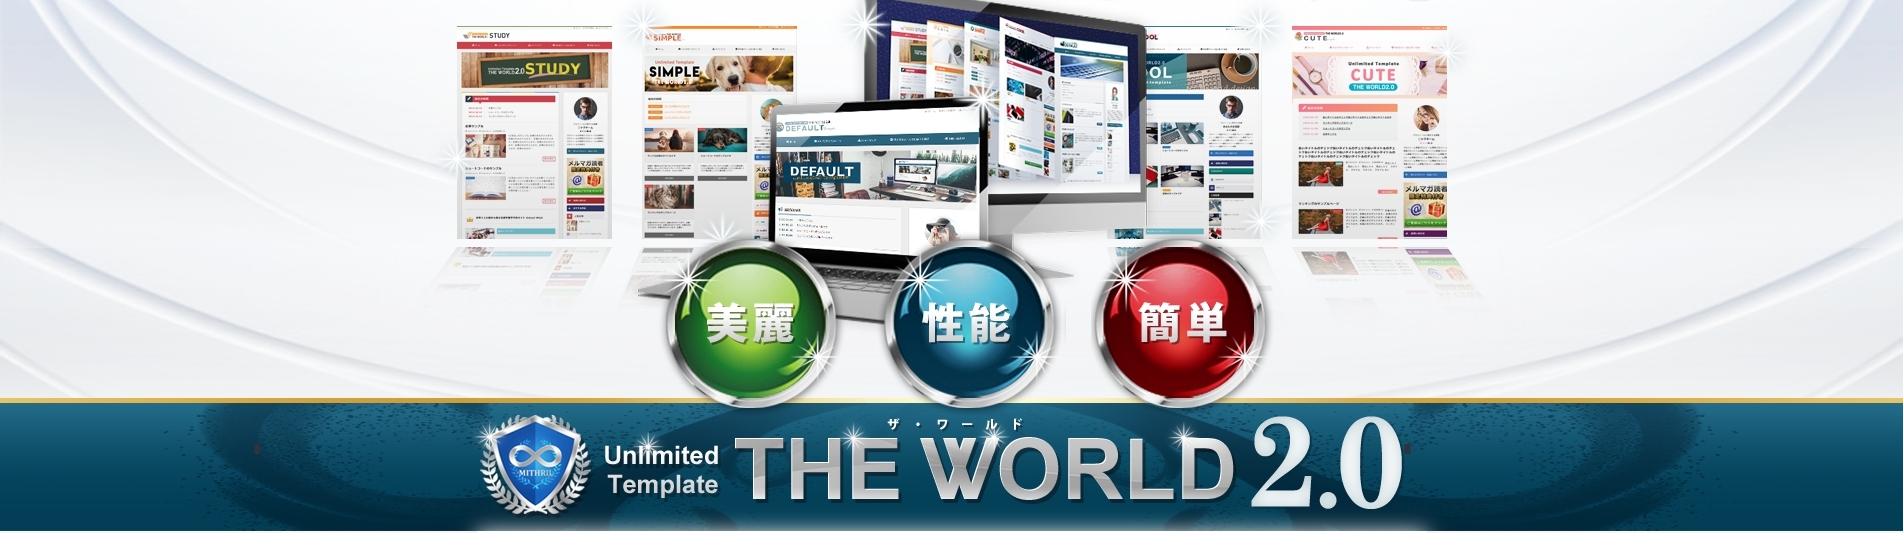 Unlimited Template 「THE WORLD2.0」（ザ・ワールド2.0）特典サイト